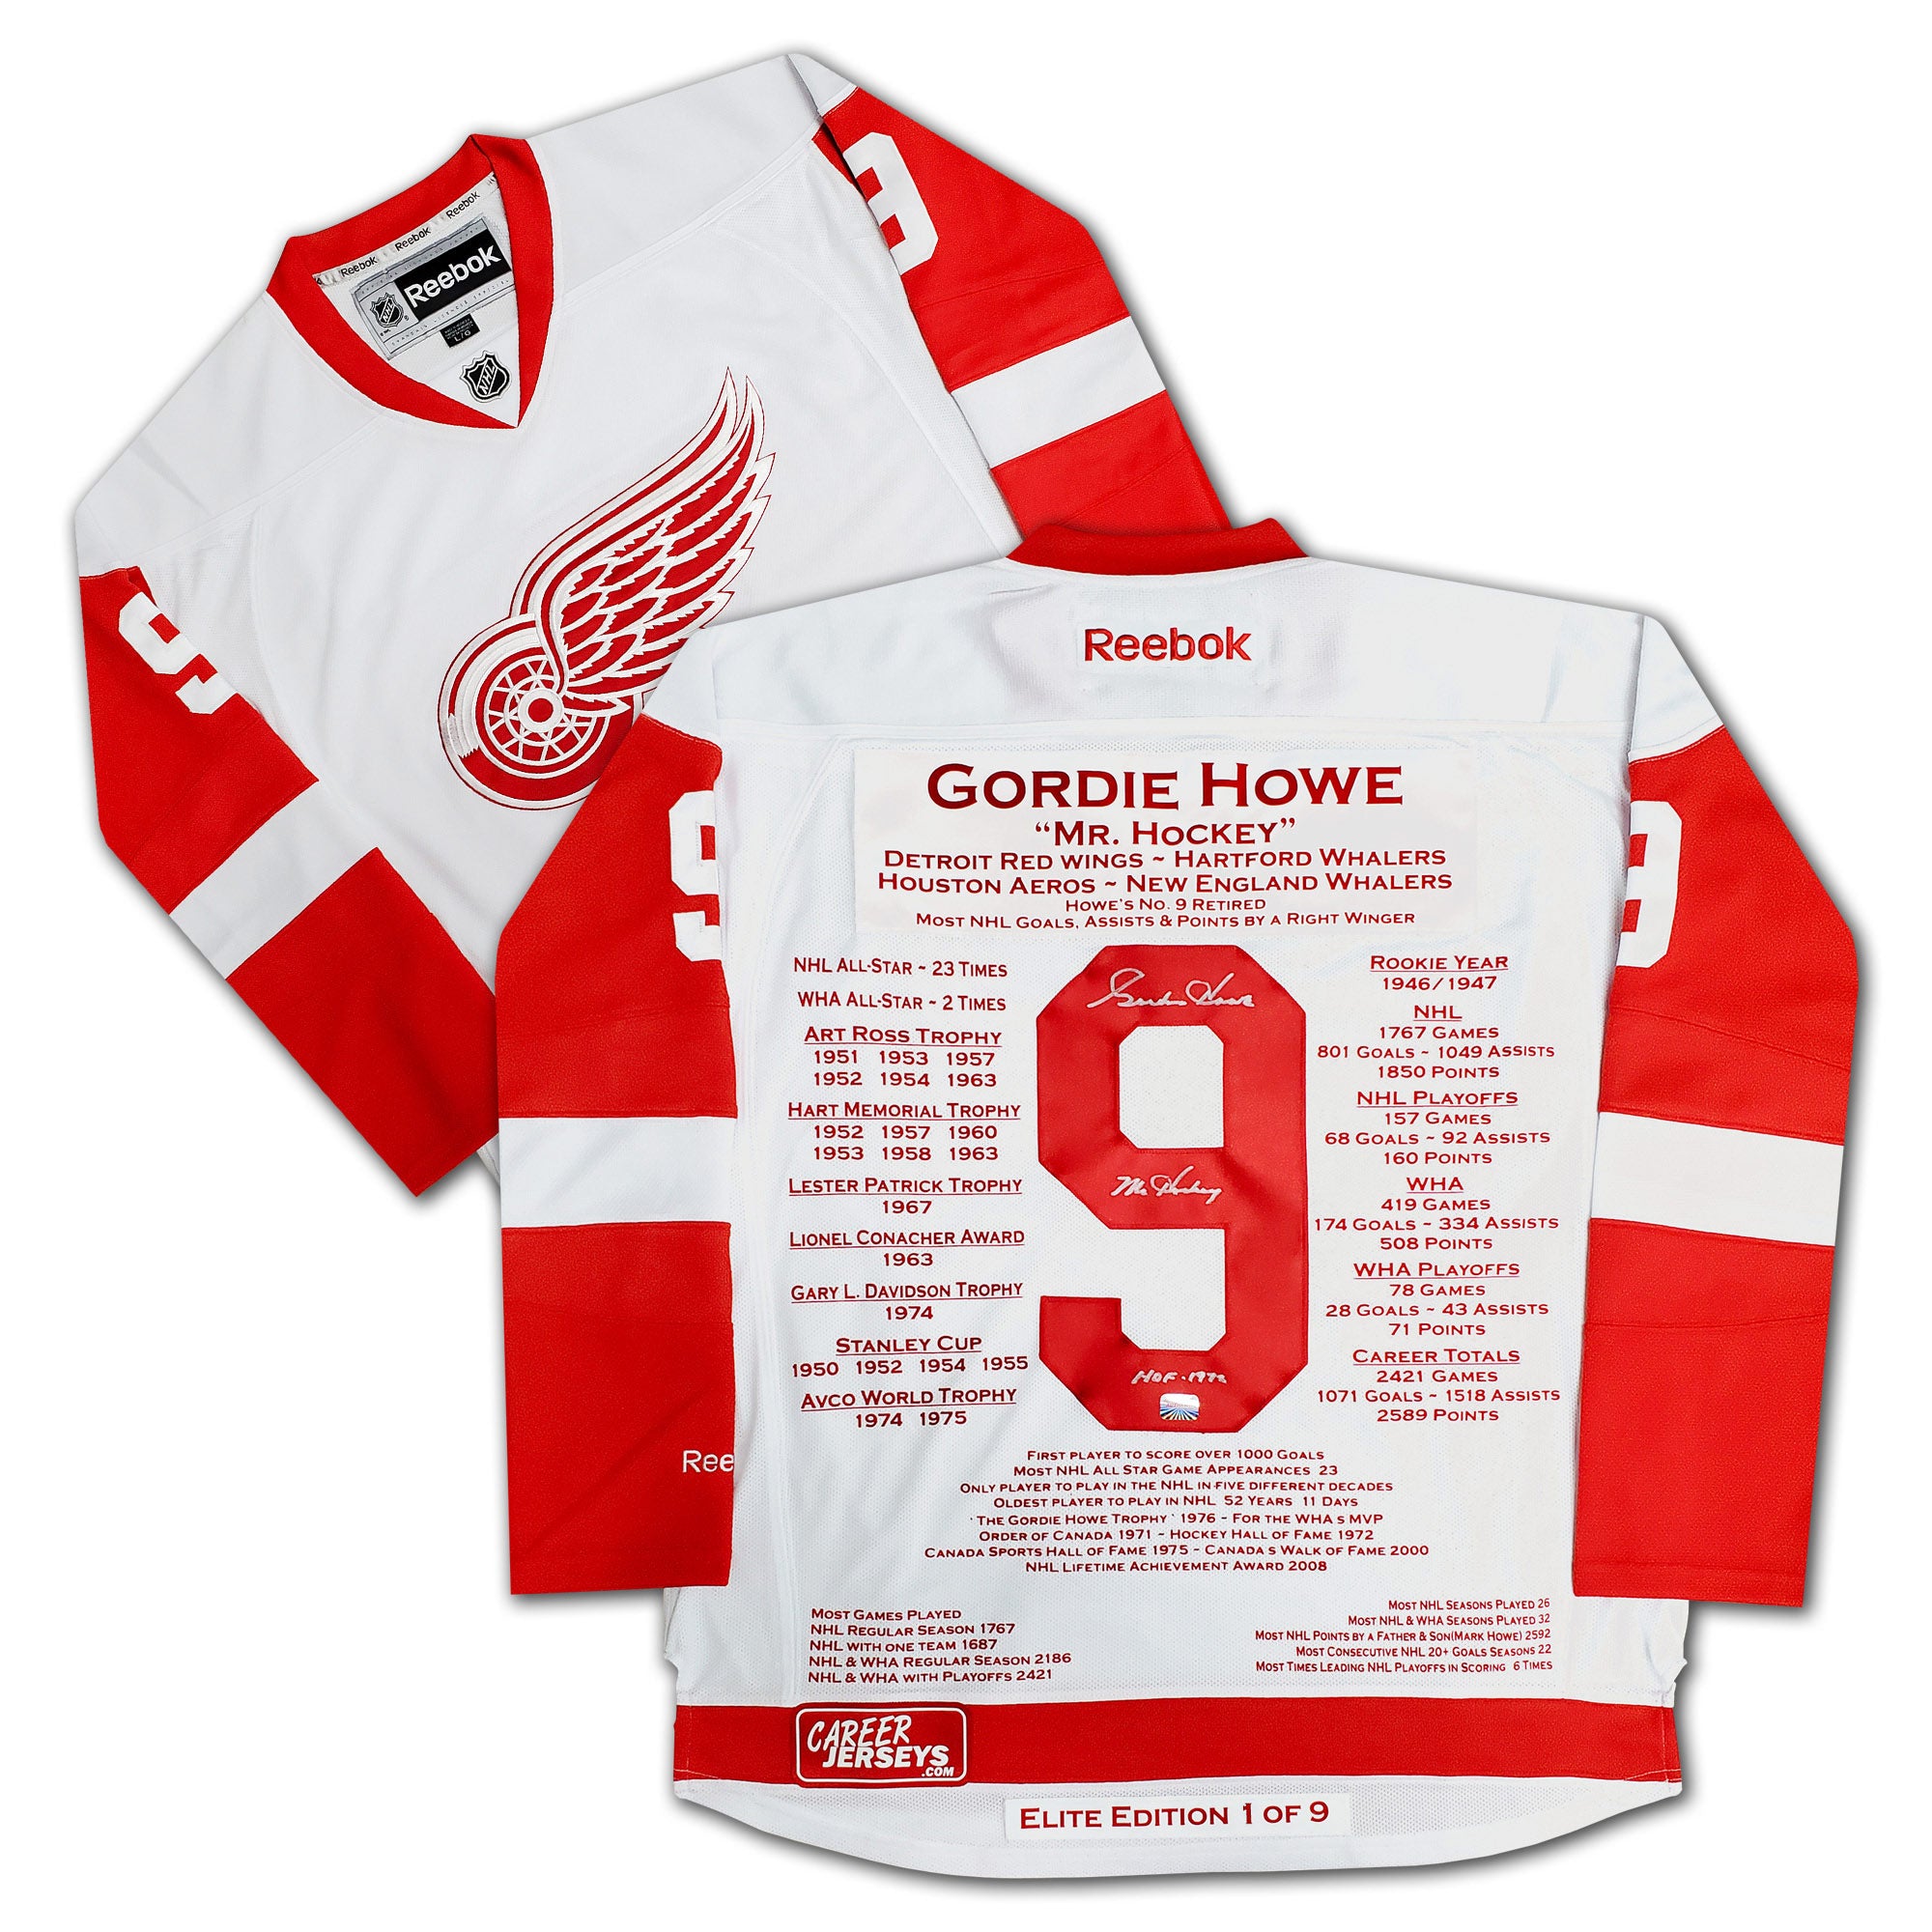 Gordie Howe Autographed Jerseys, Signed Gordie Howe Inscripted Jerseys